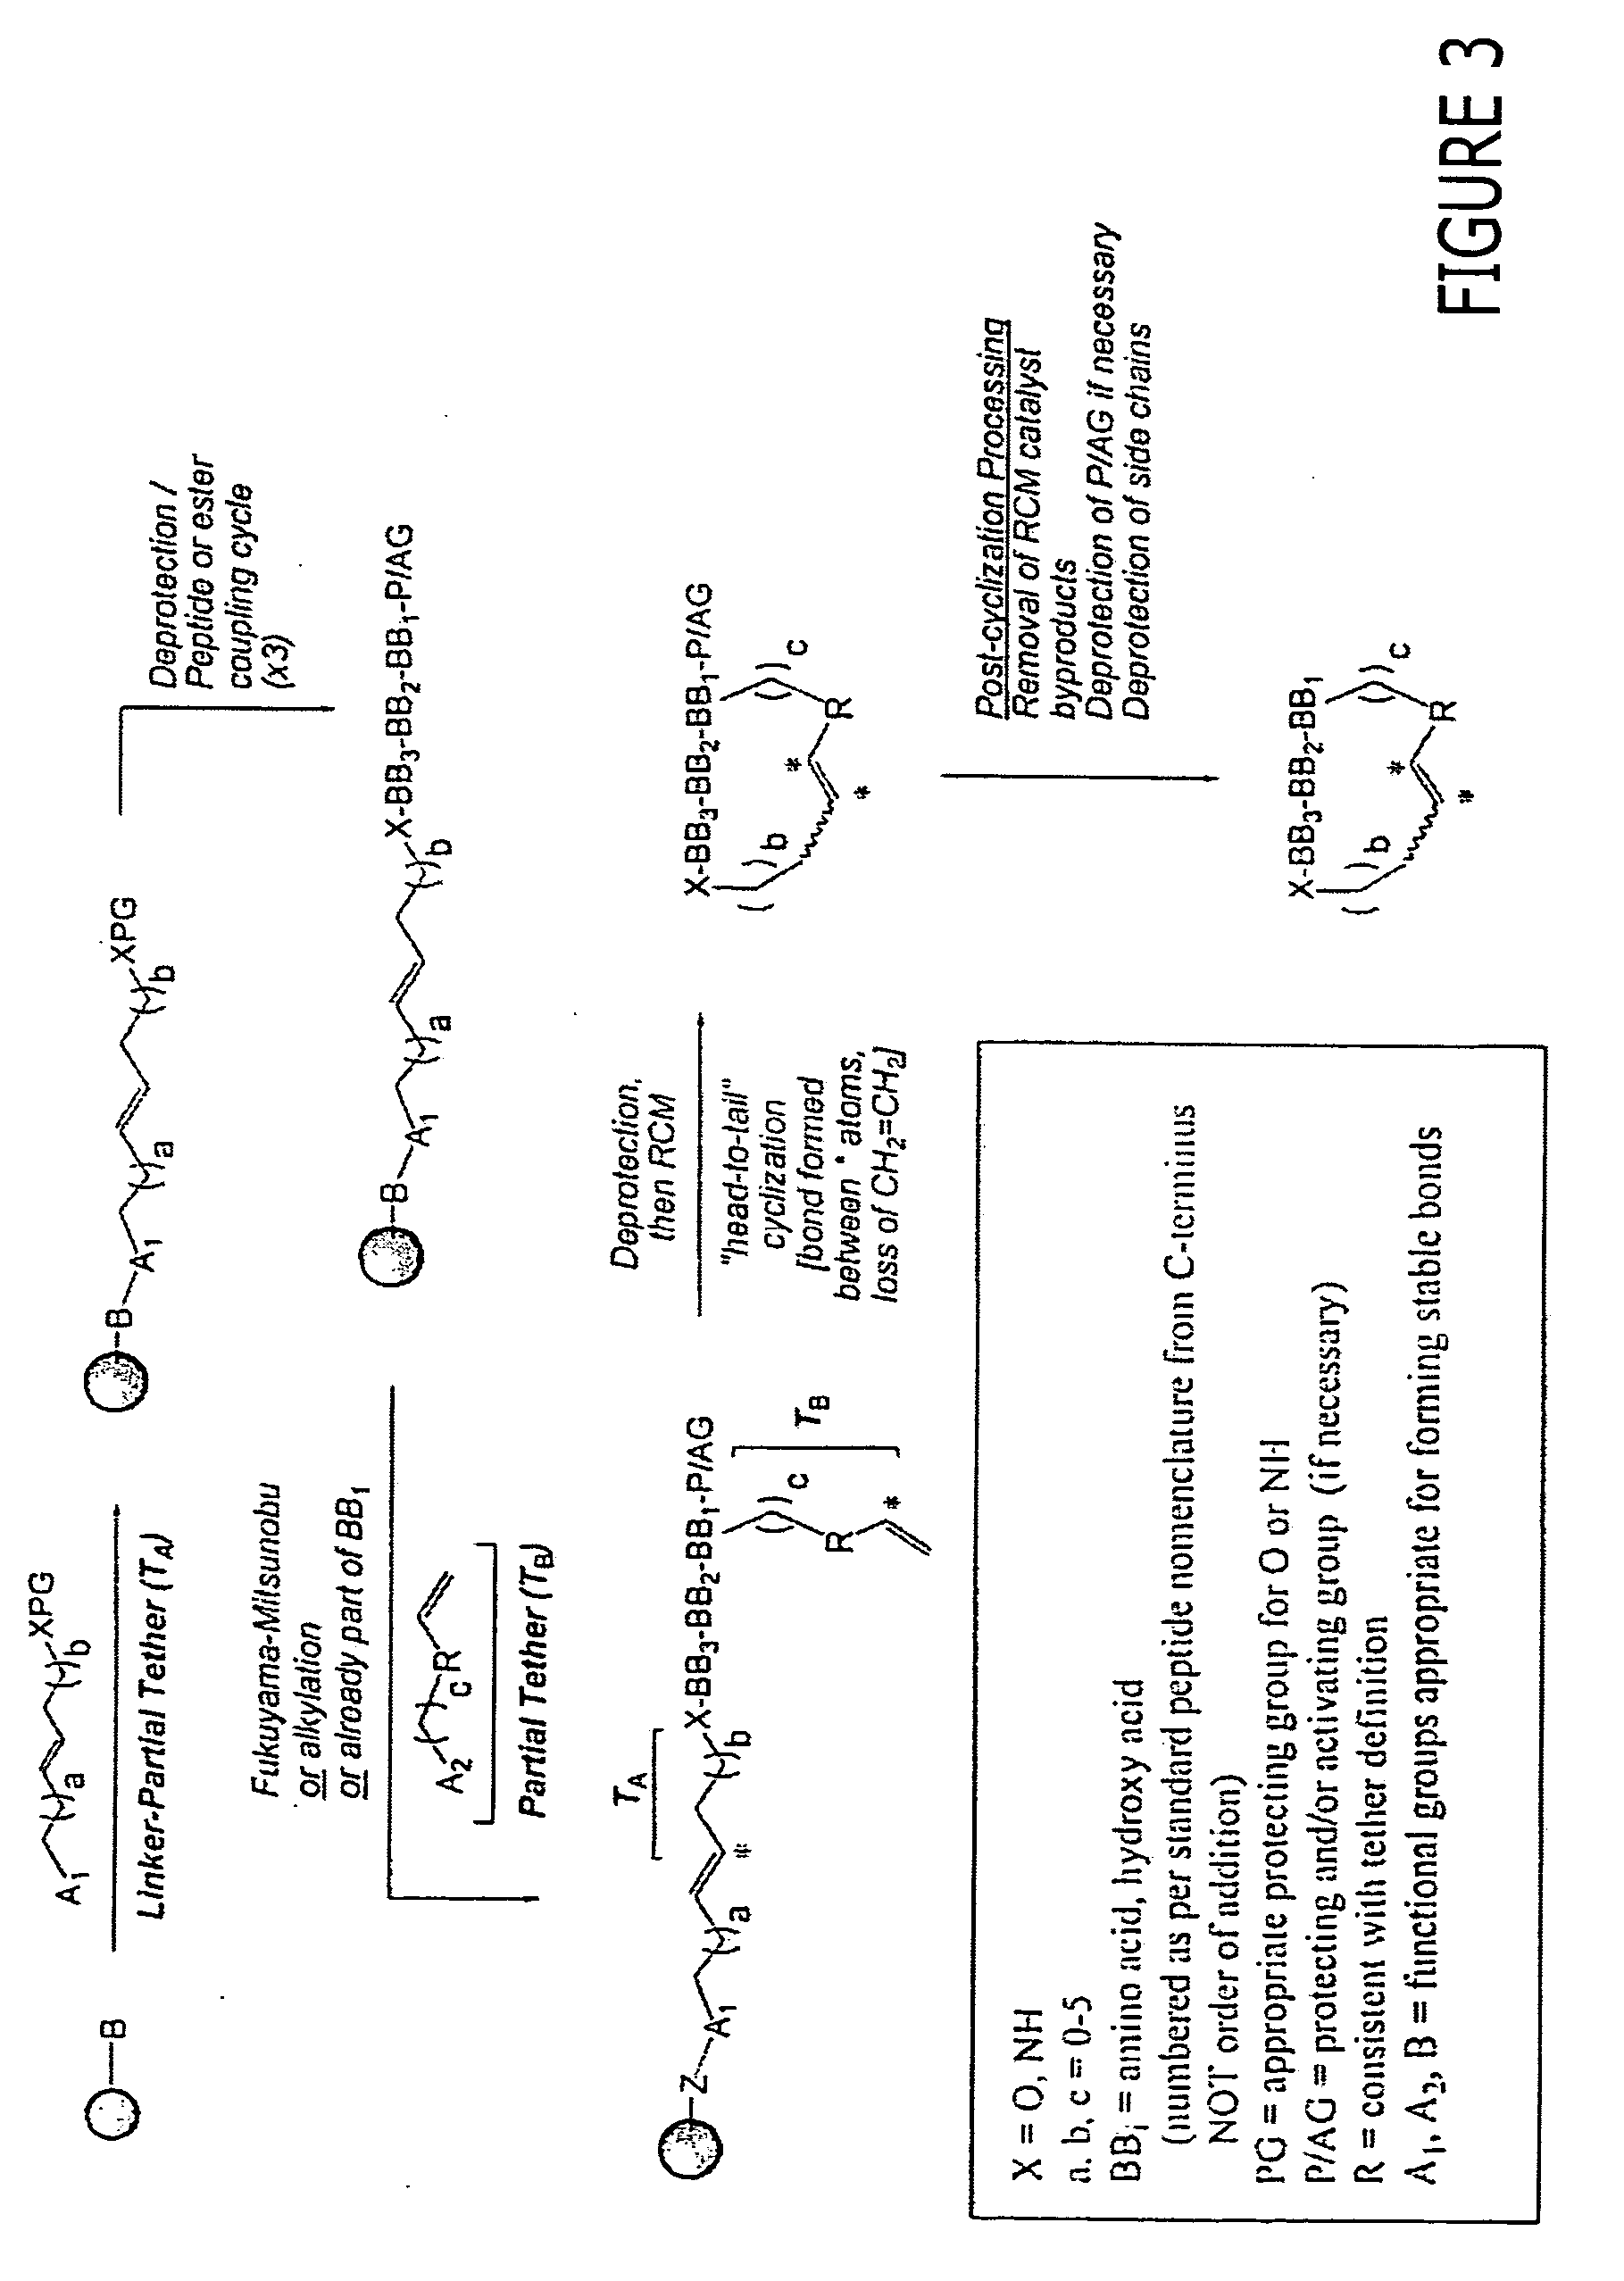 Macrocyclic modulators of the ghrelin receptor